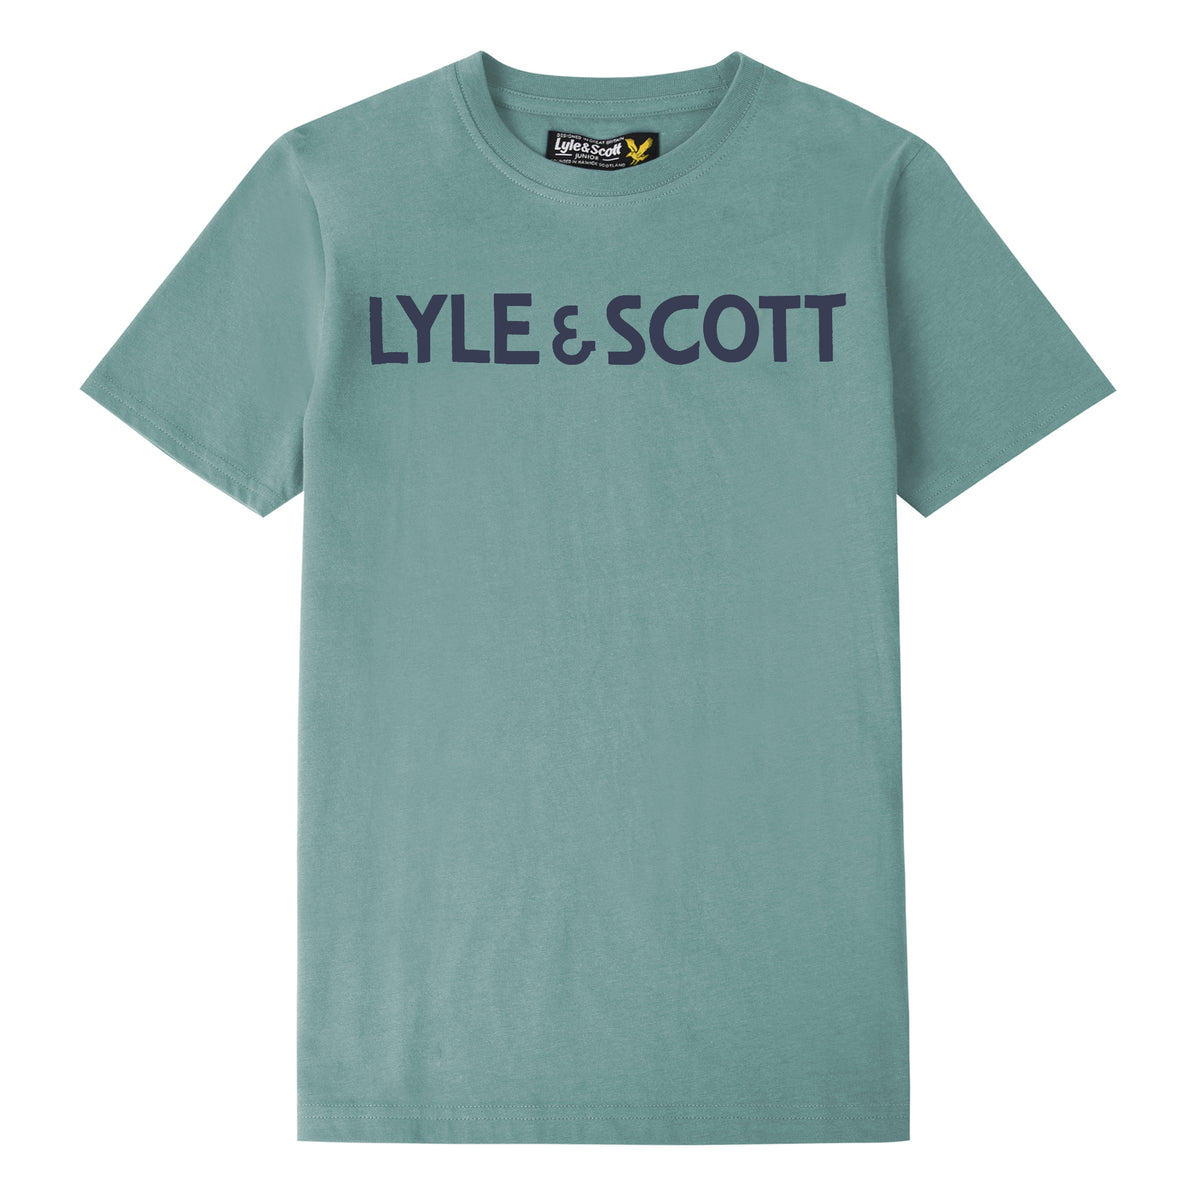 Lyle & Scott Boys 'Text Tee' Short Sleeved T-Shirt, 01, Lsc0896, Oil Blue